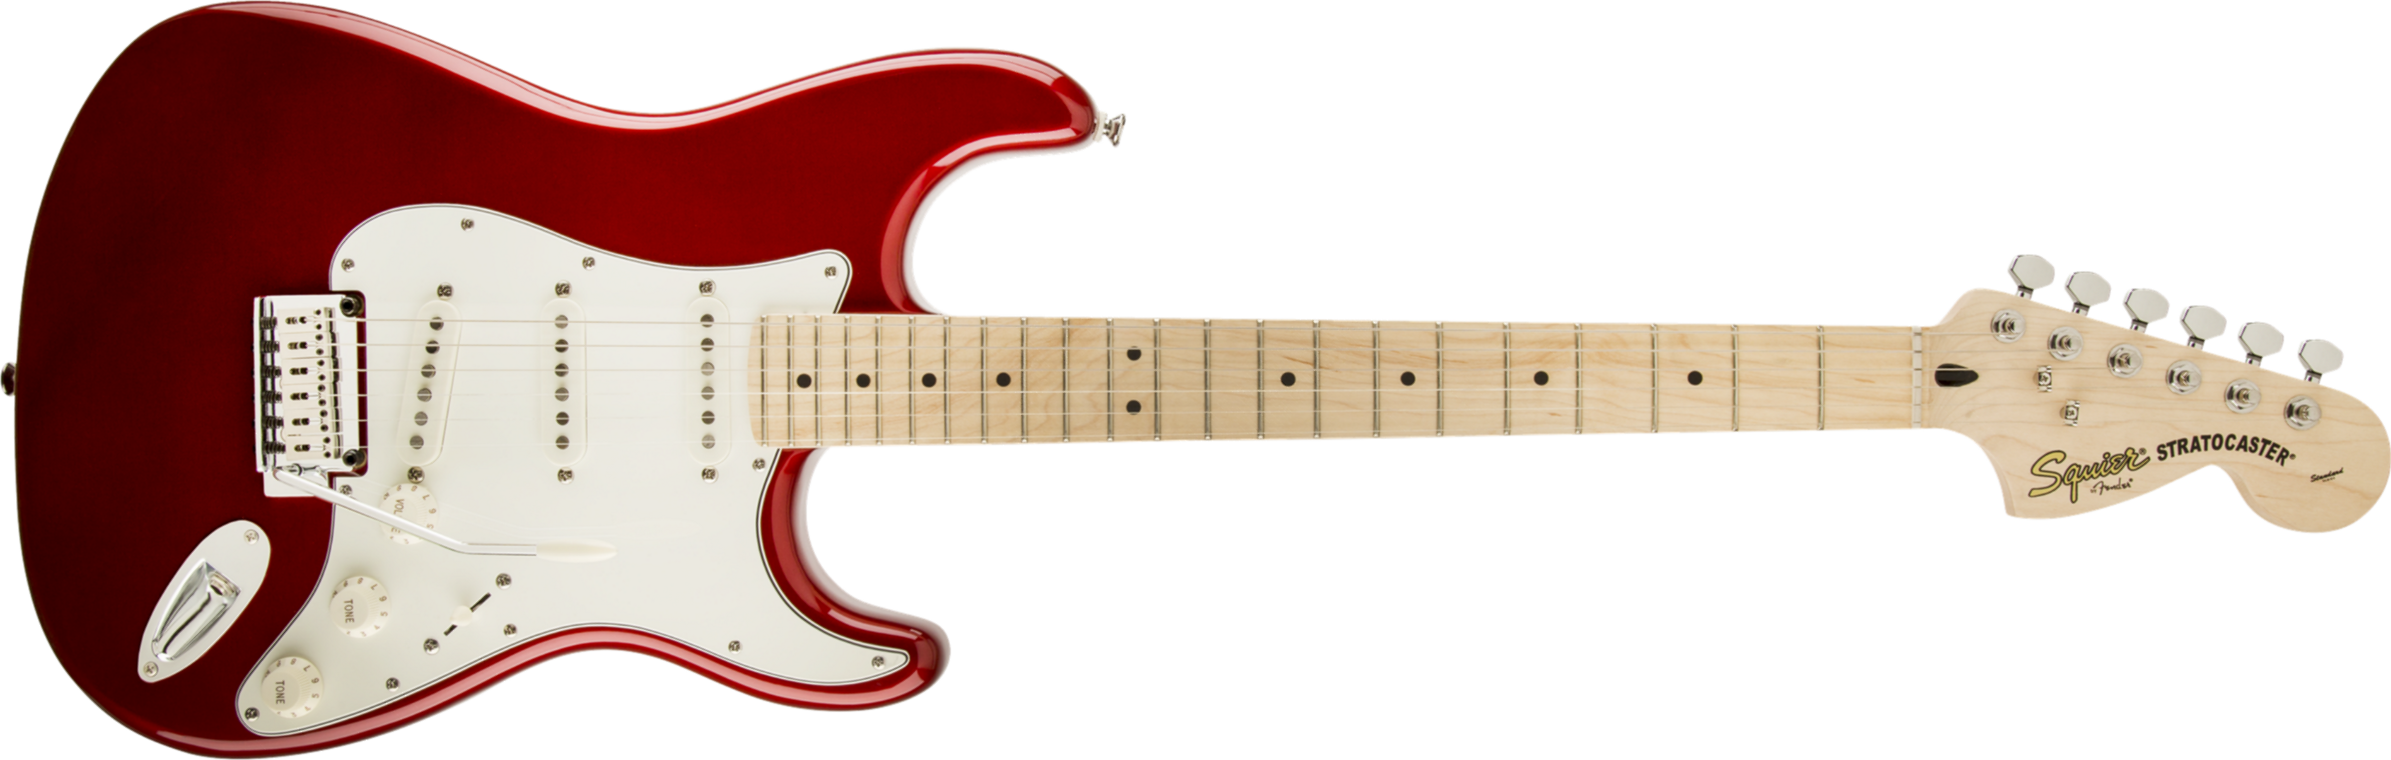 Squier Strat Standard Mn - Candy Apple Red - Guitare Électrique Forme Str - Main picture